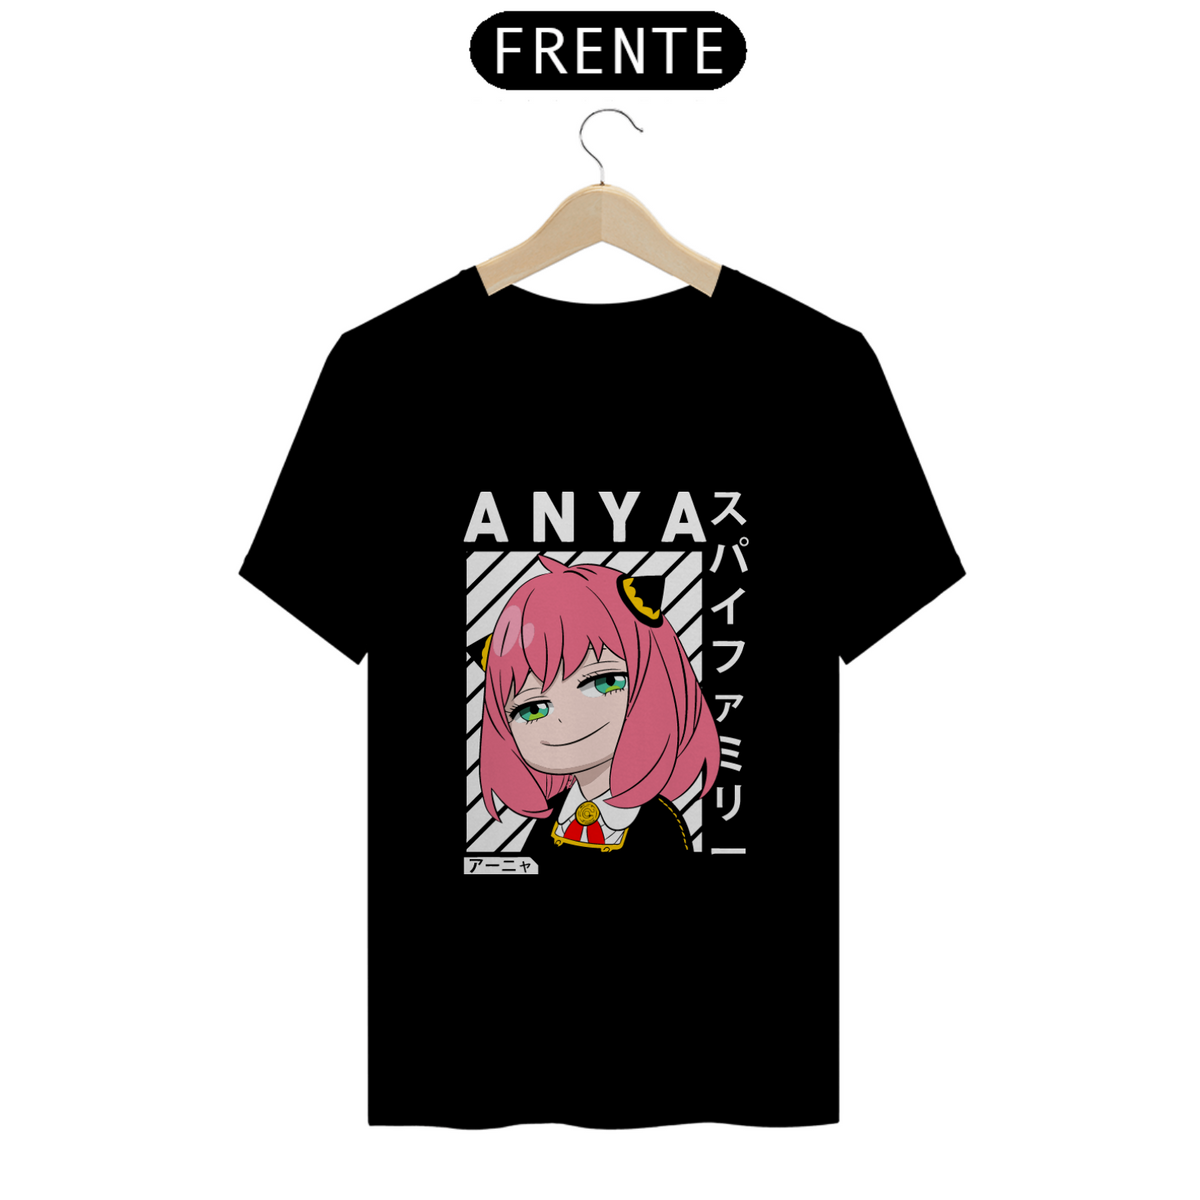 Nome do produto: Camisa Anya II